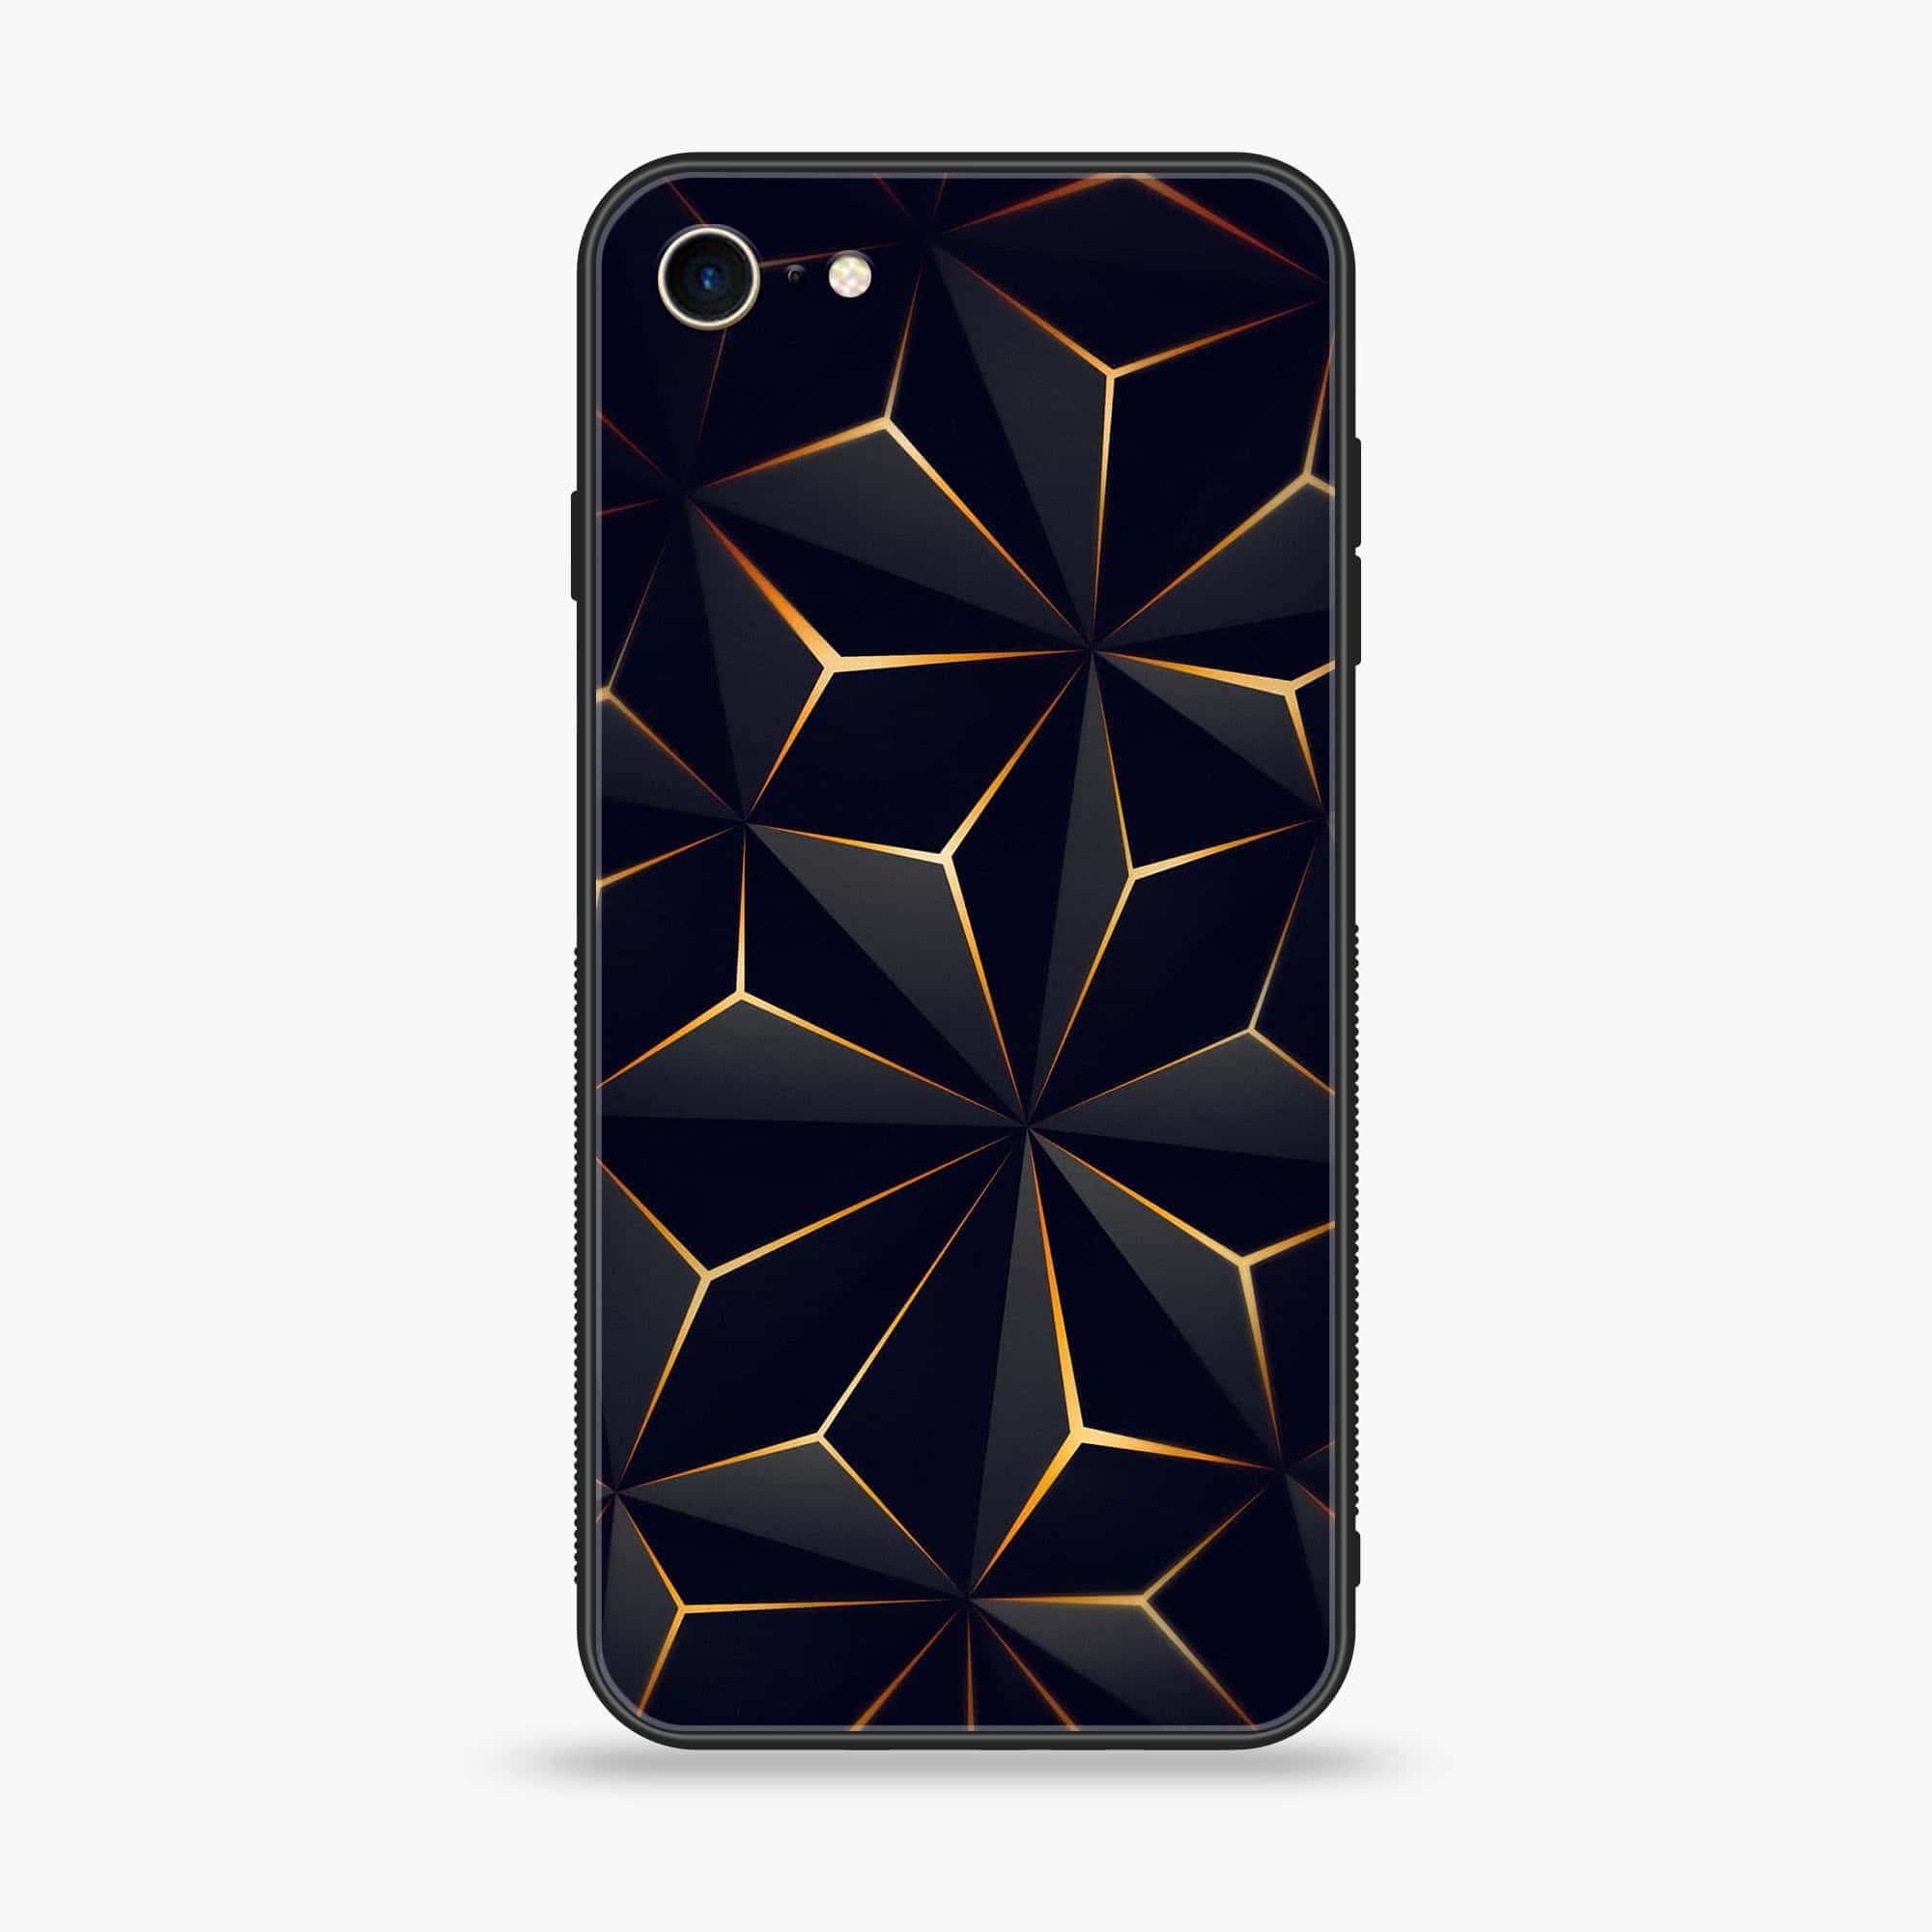 iPhone 7 - 3D Designs Series - Premium Printed Glass soft Bumper shock Proof Case